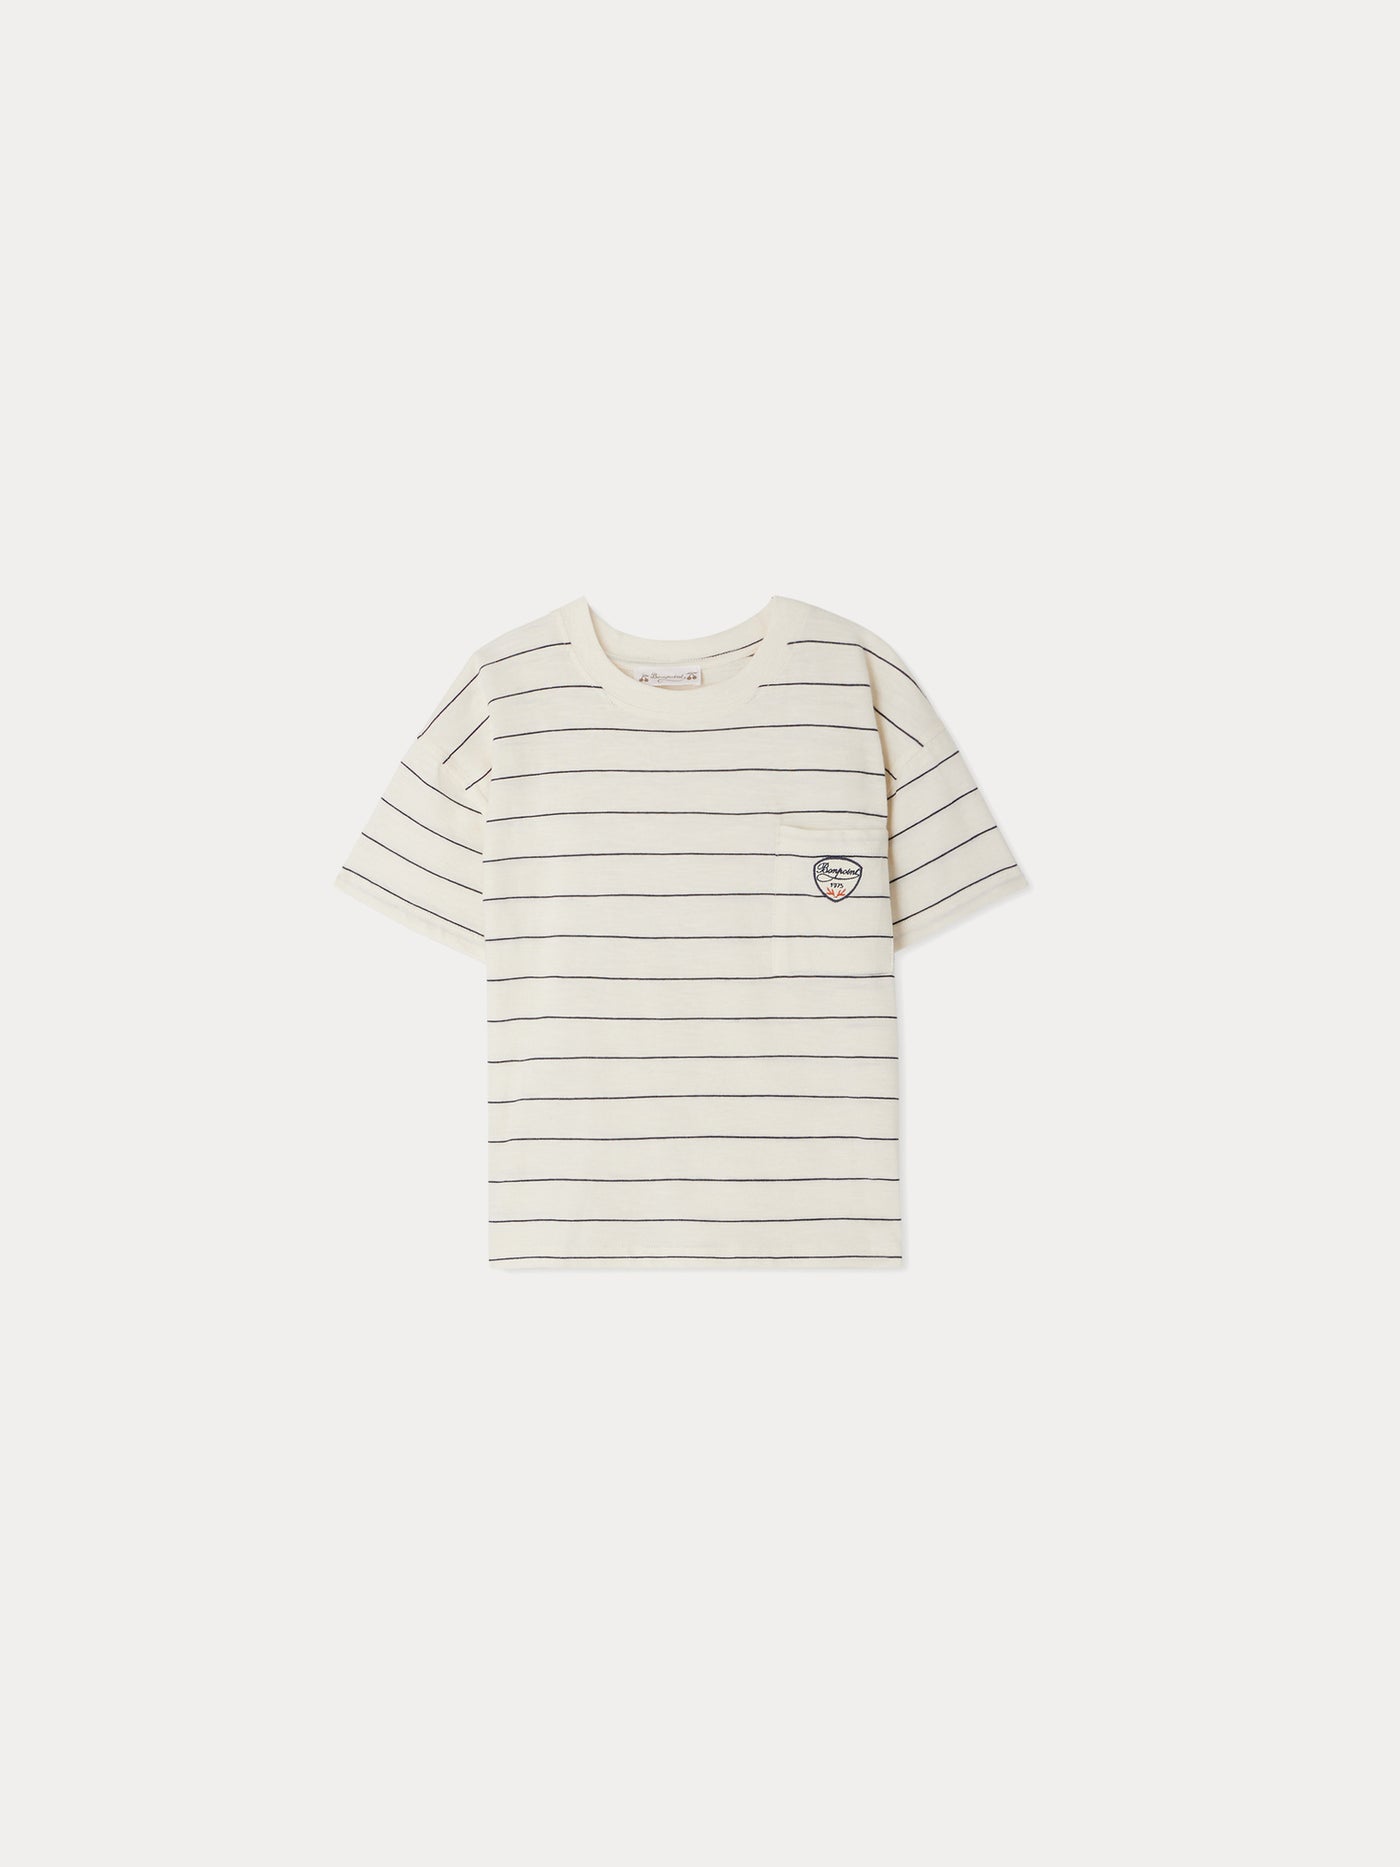 Gio striped white T-shirt